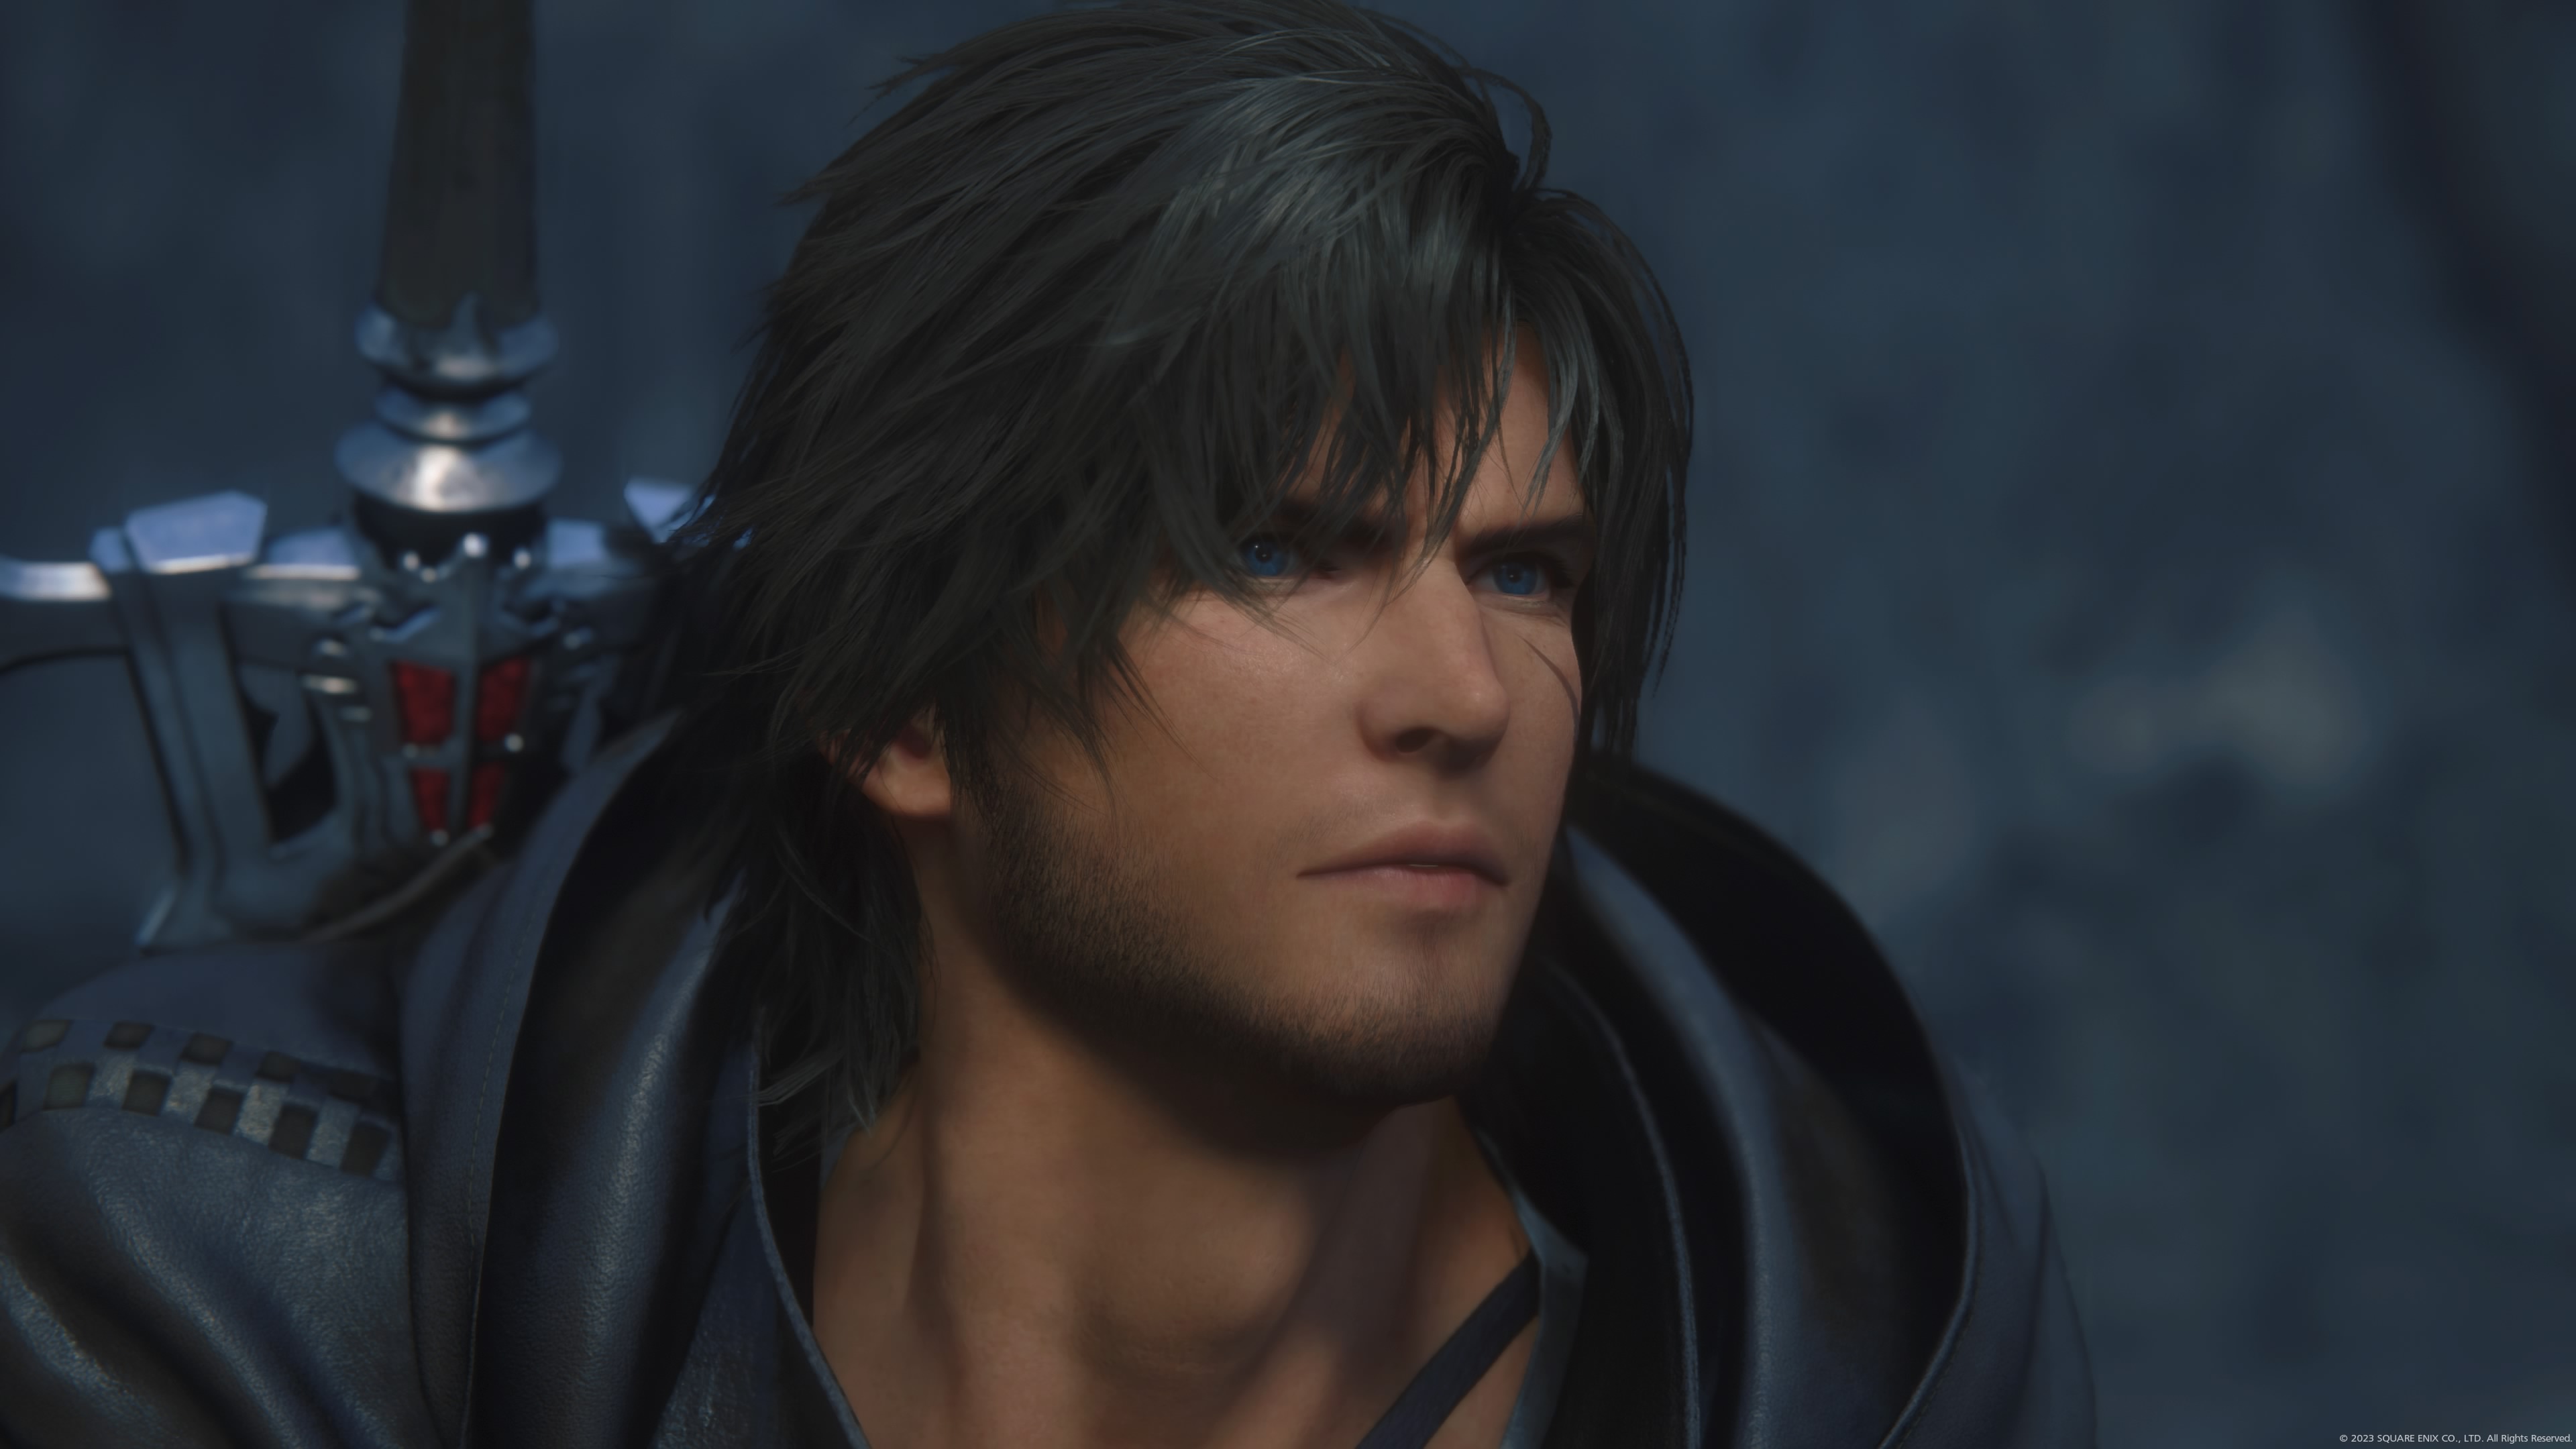 Final Fantasy XVi Clive Rosfield PlayStation Playstation 5 Swordman Dark Hair Black Hair Cape Square 3840x2160